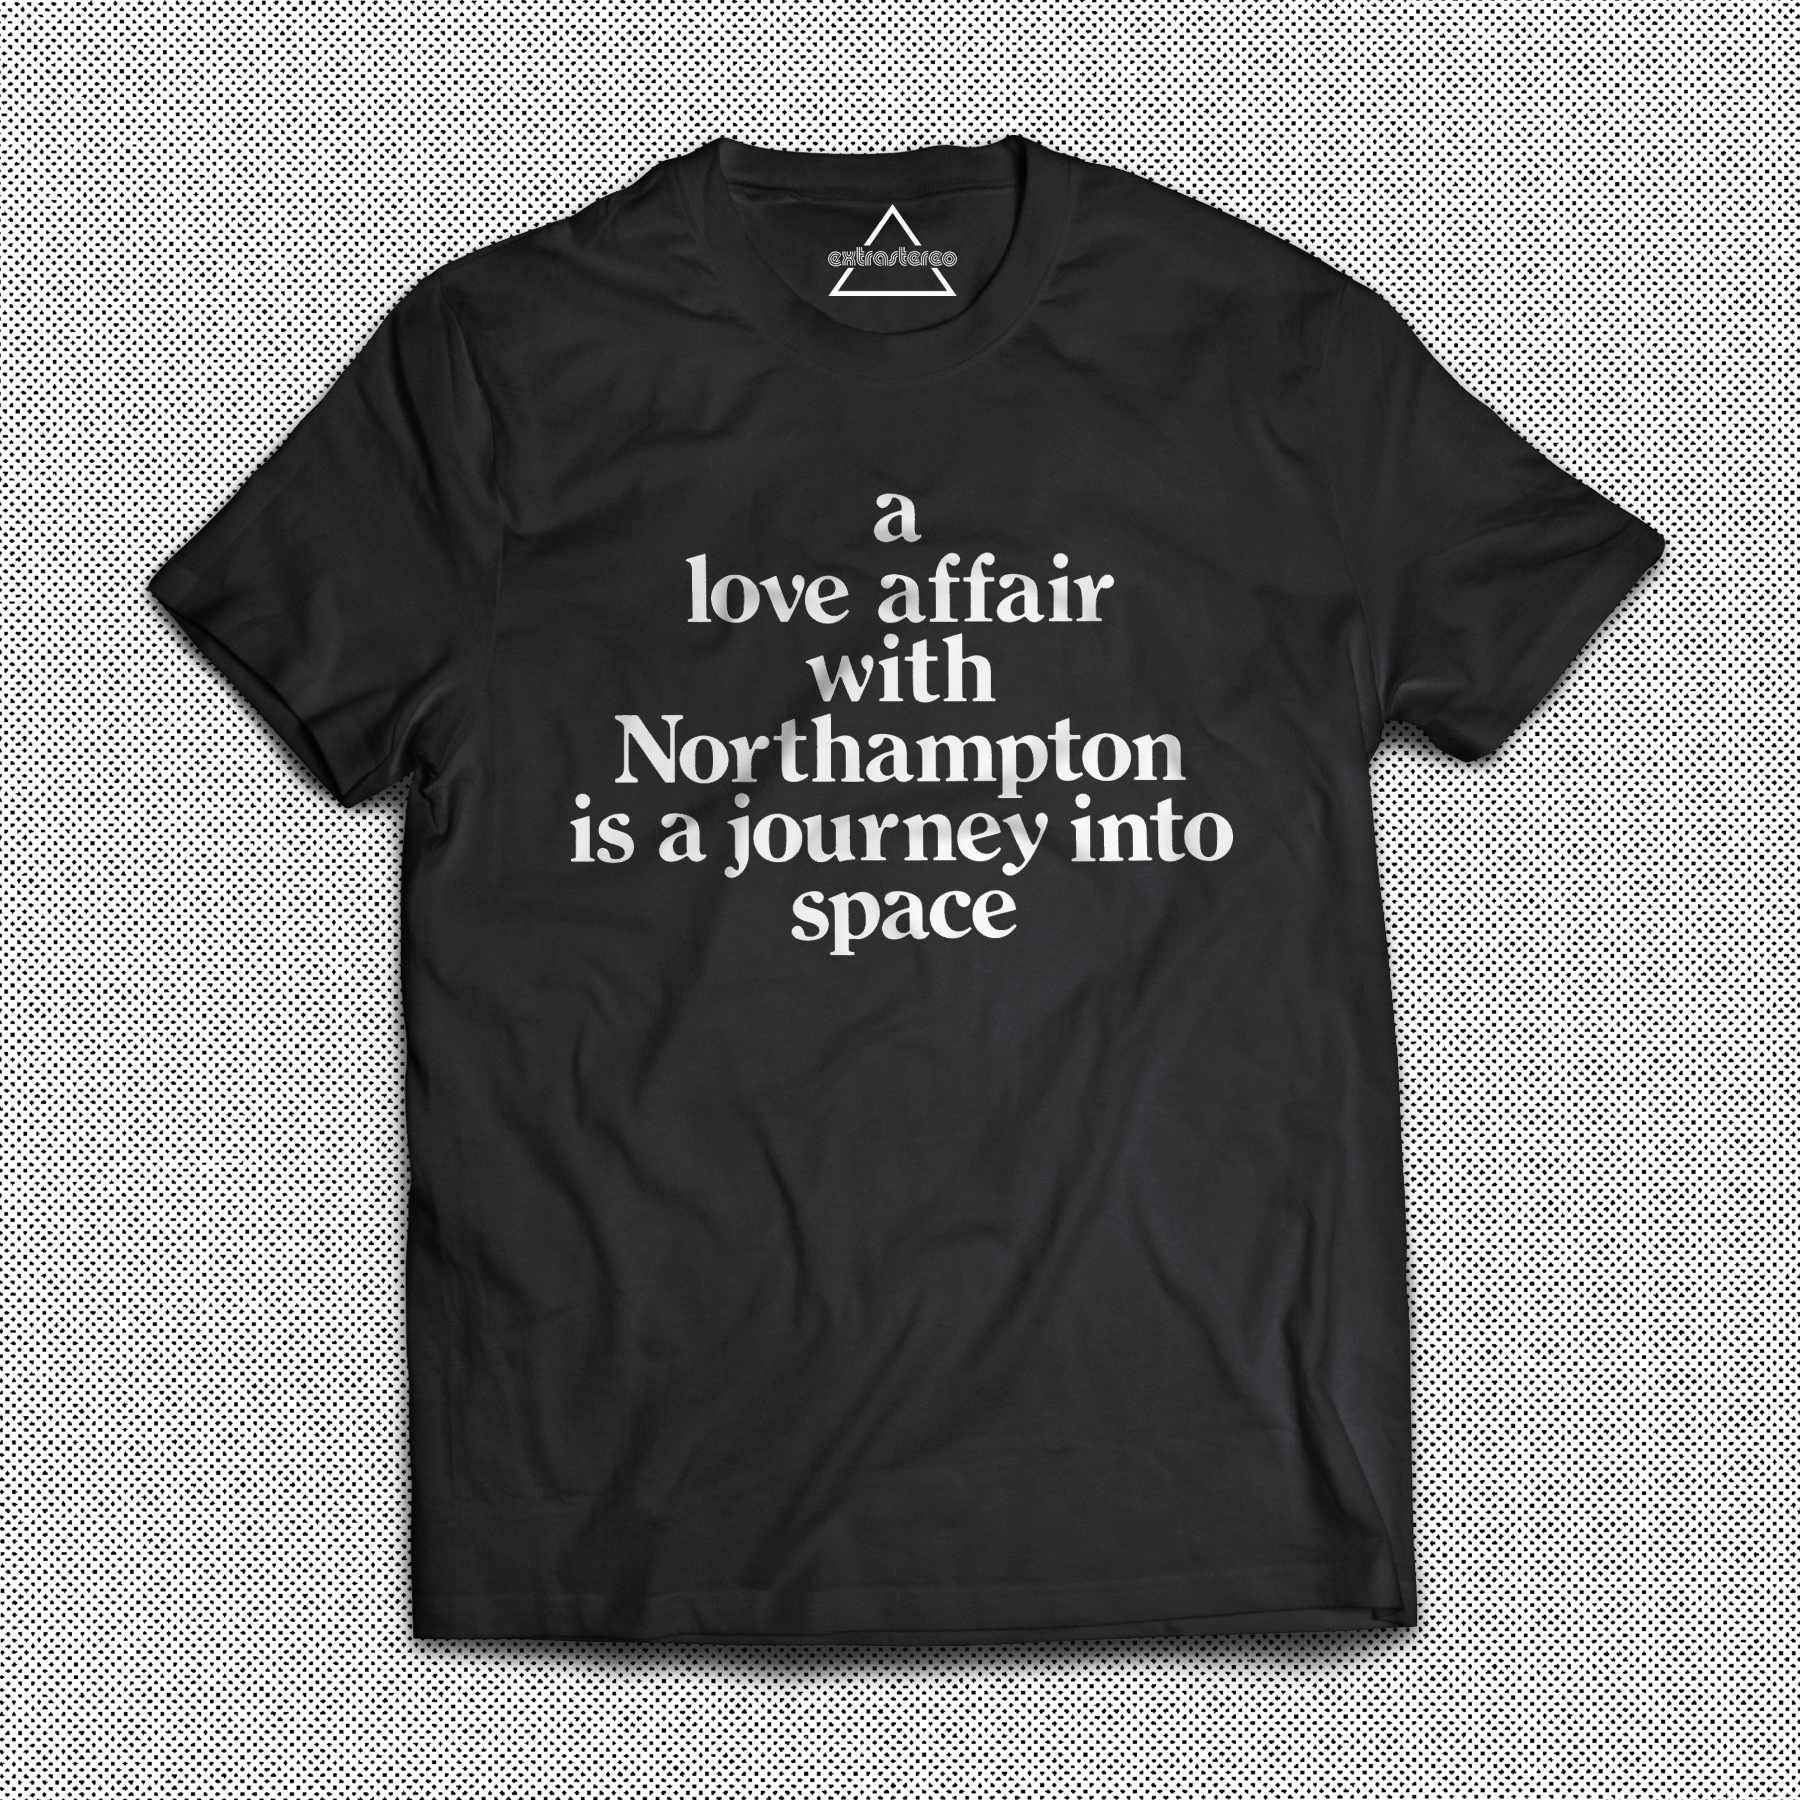 extrastereo - Northampton 'Love Affair' T-shirt